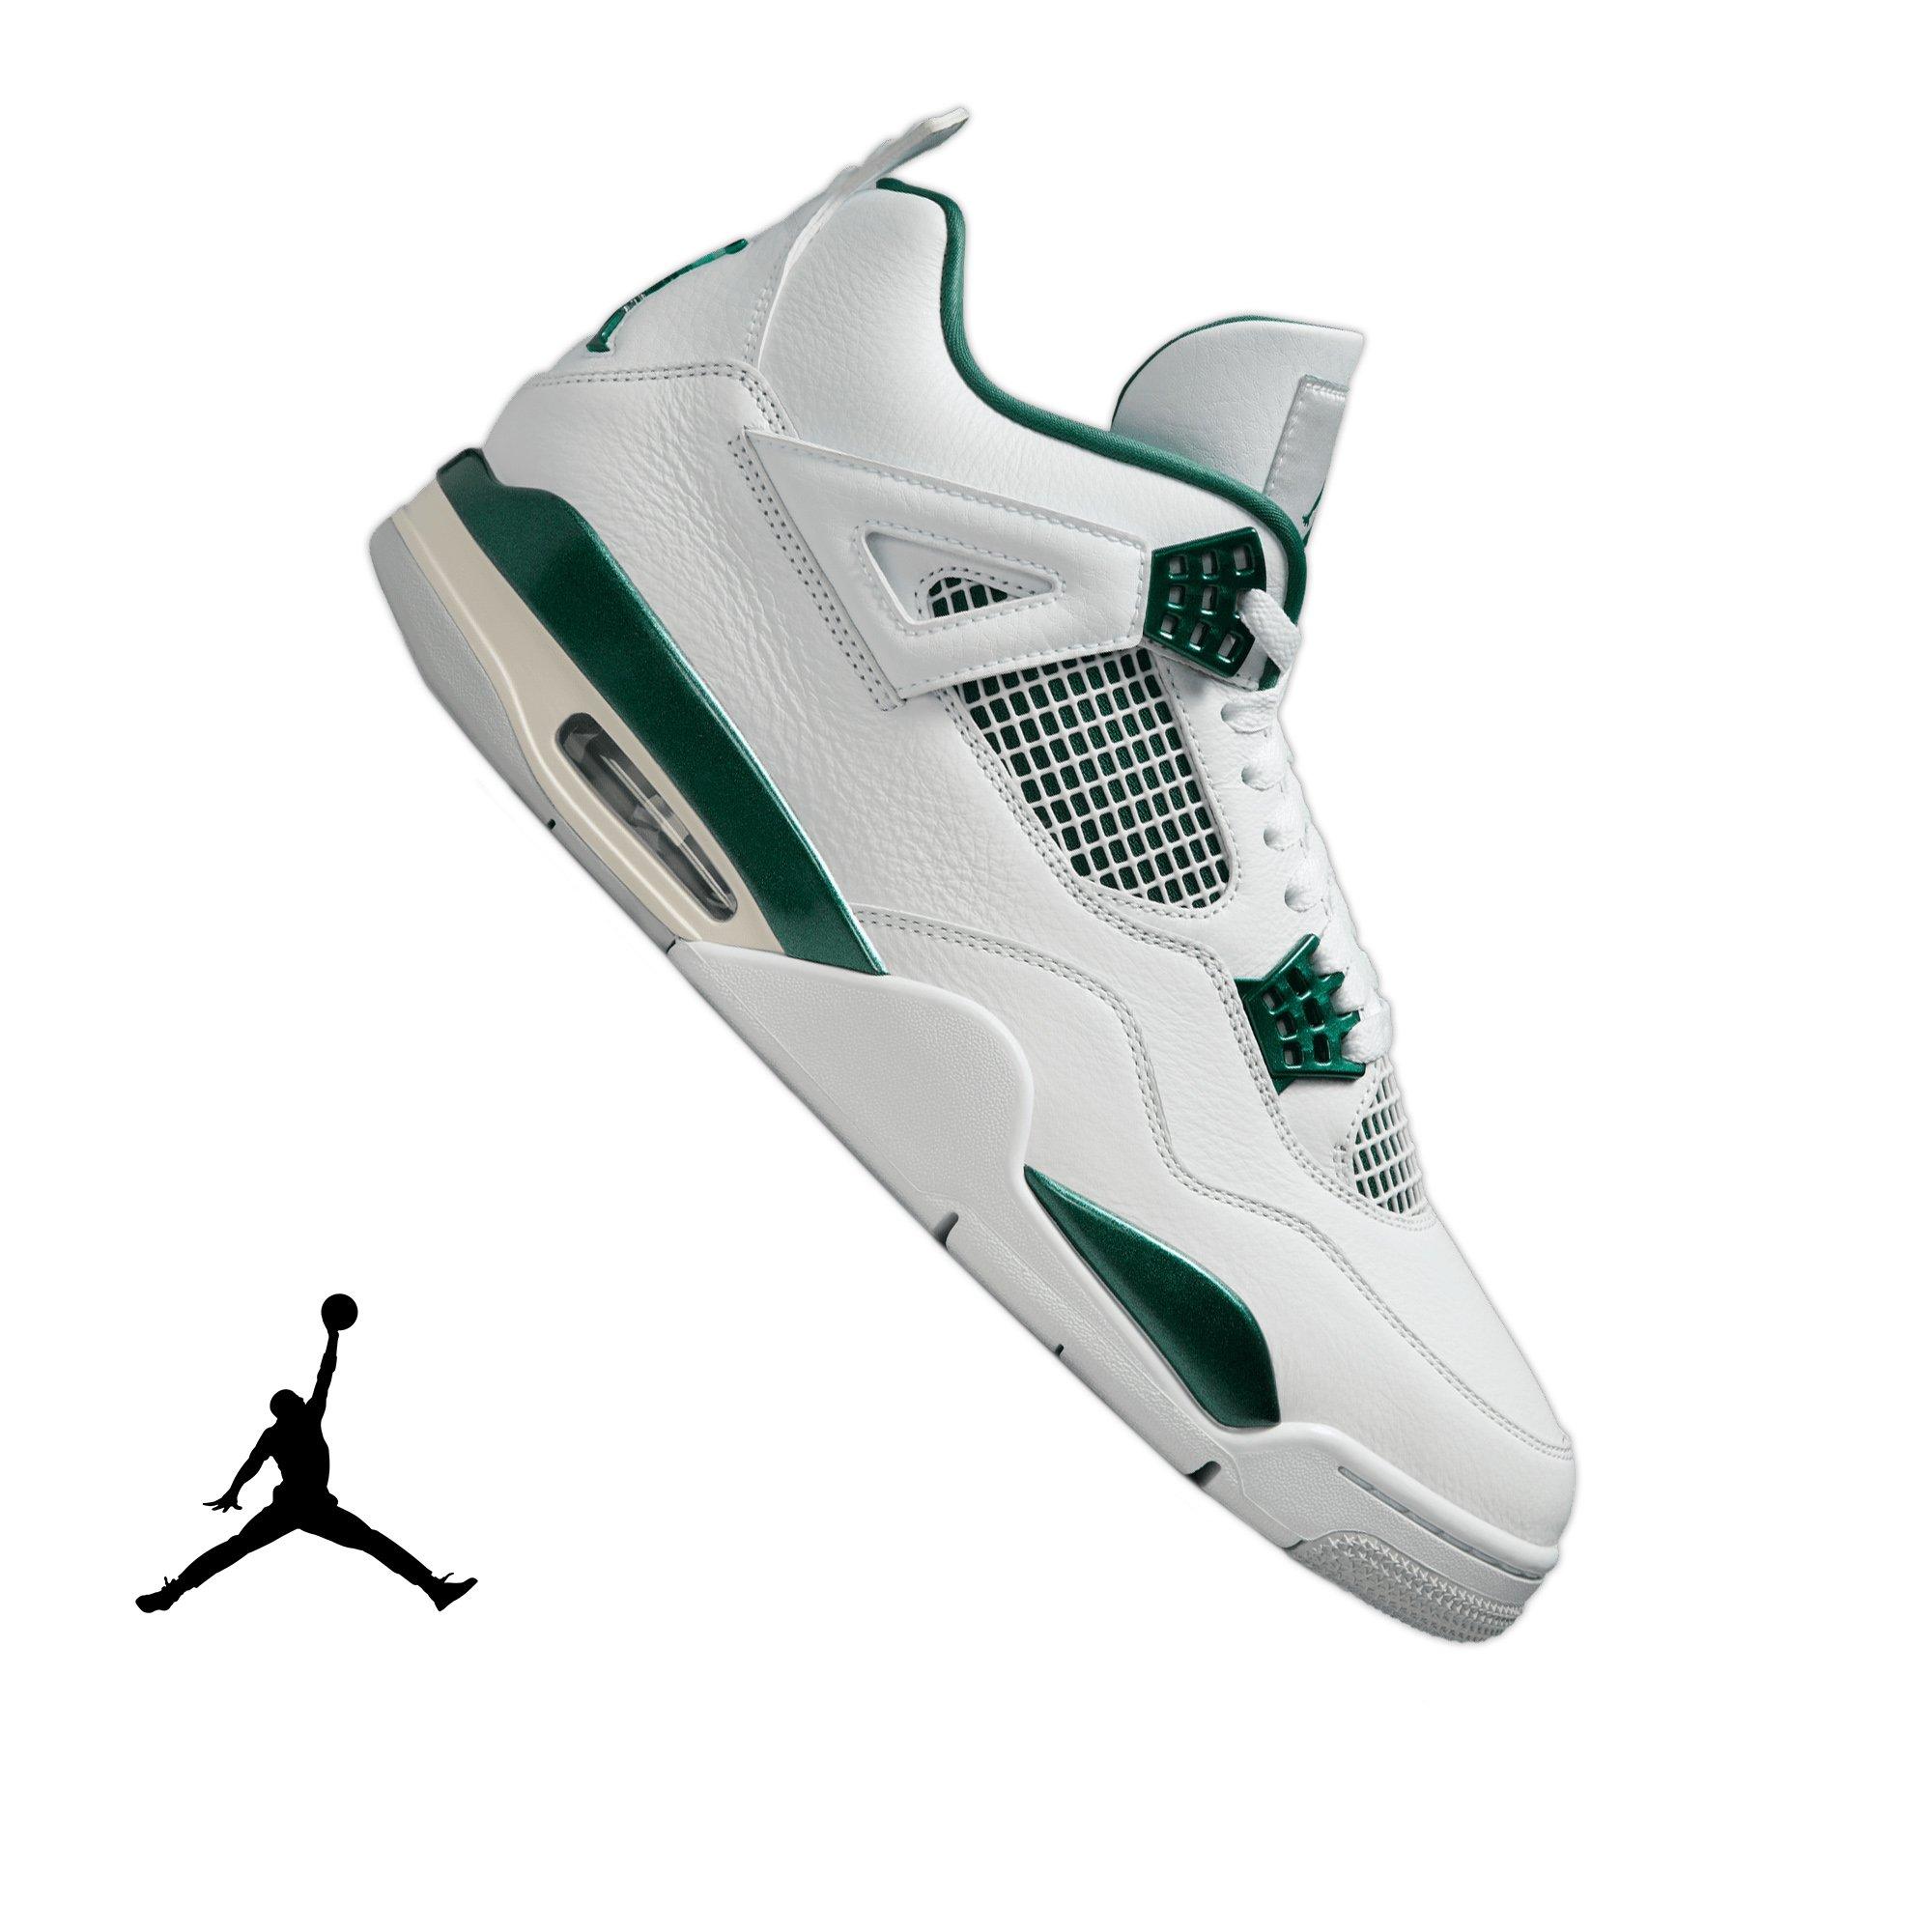 Jordan 4 Retro “Oxidized Green” Men's Shoe - Hibbett | City Gear